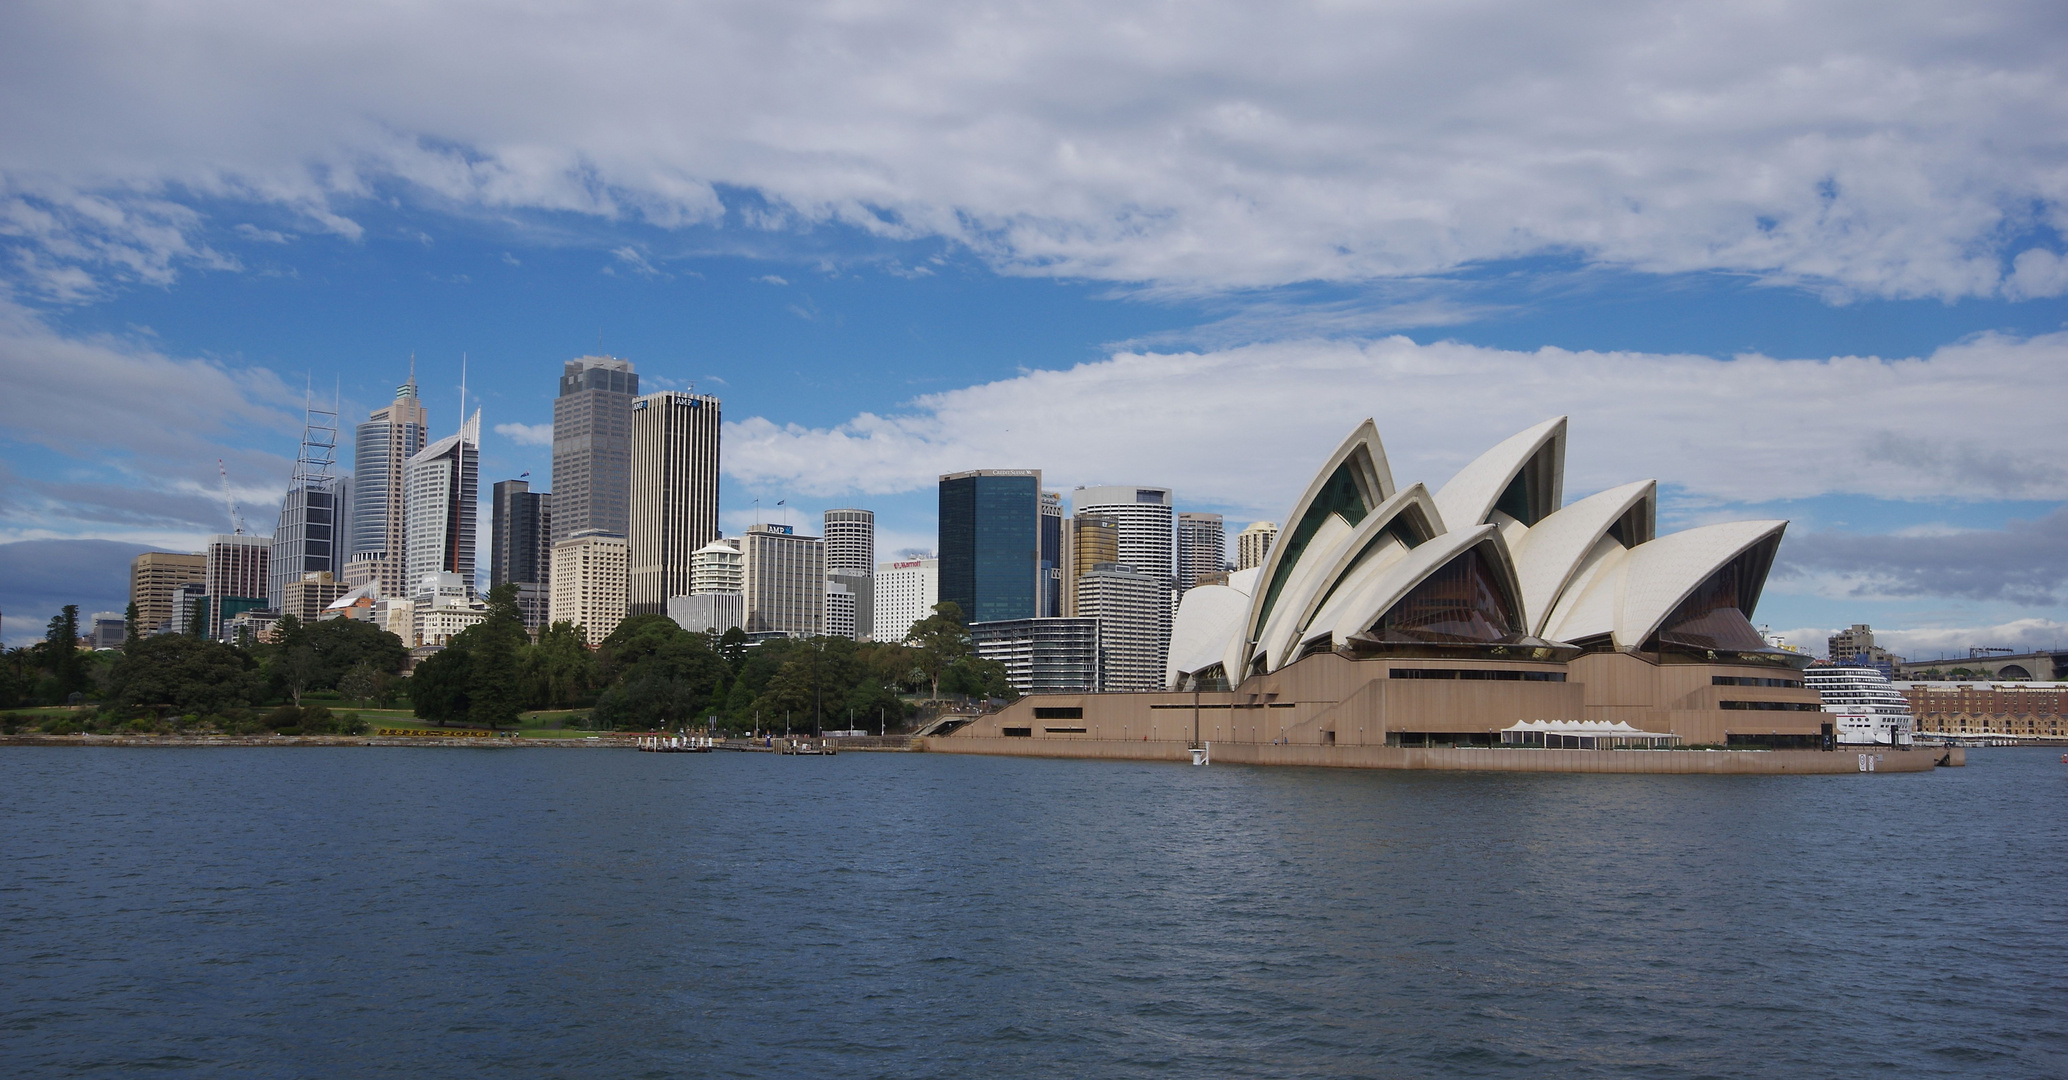 Sydney - Skyline mit Oper